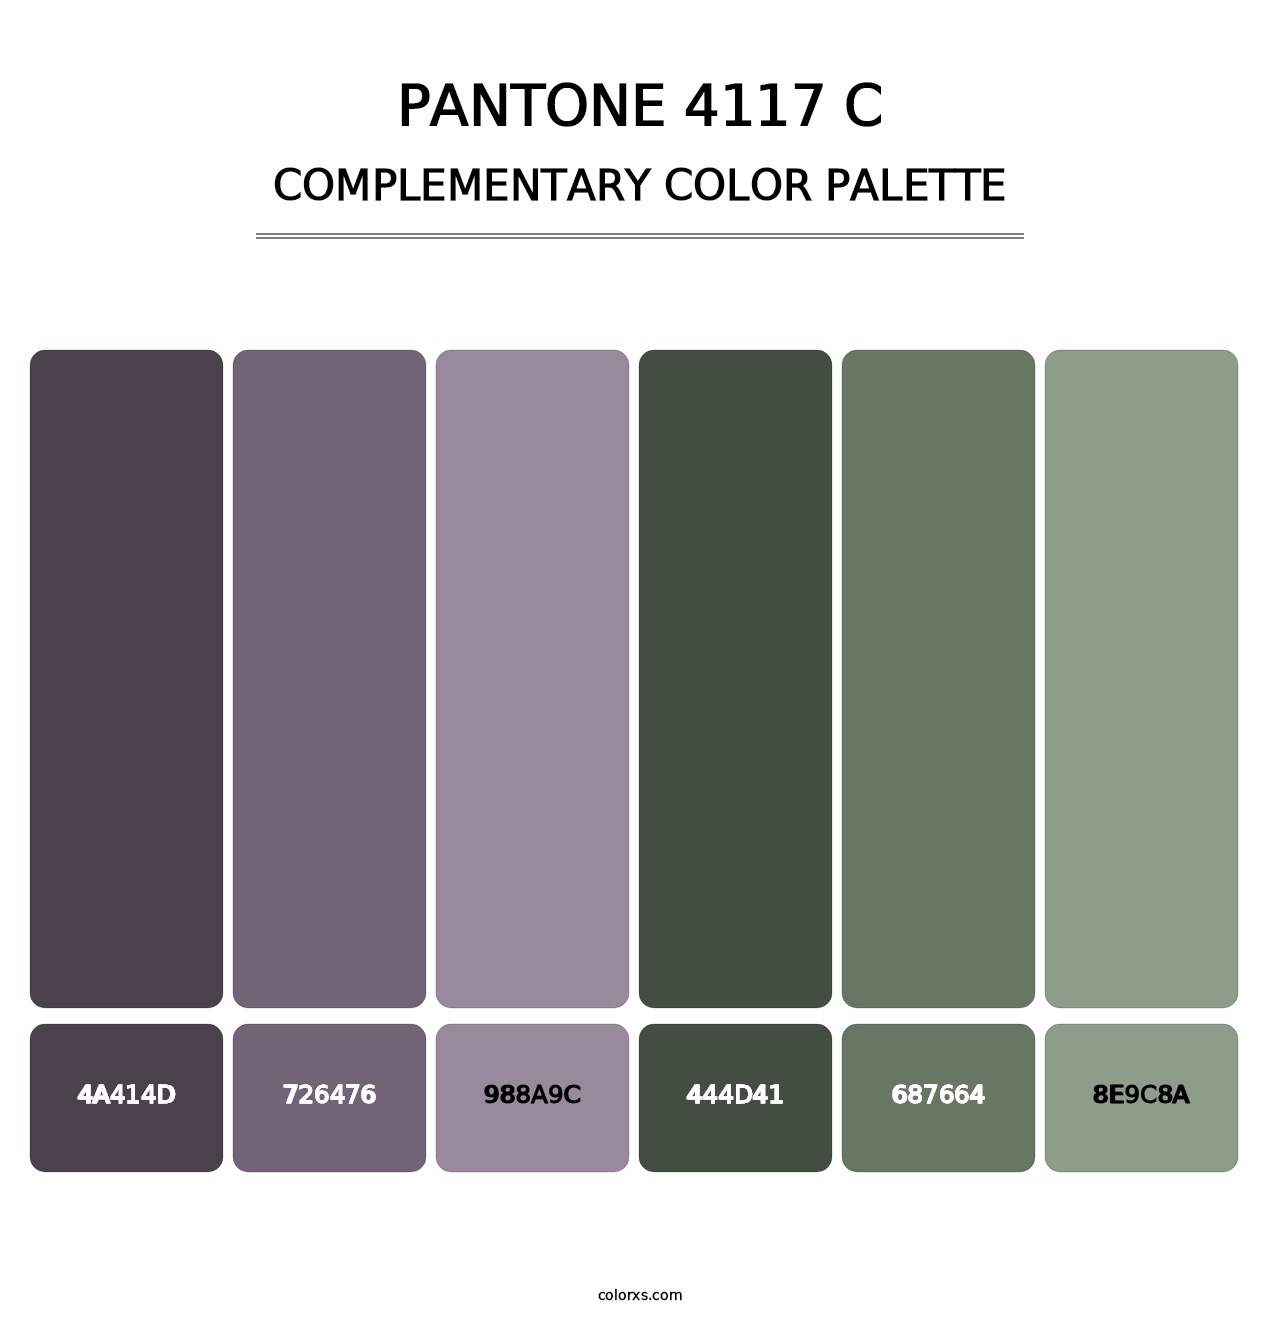 PANTONE 4117 C - Complementary Color Palette